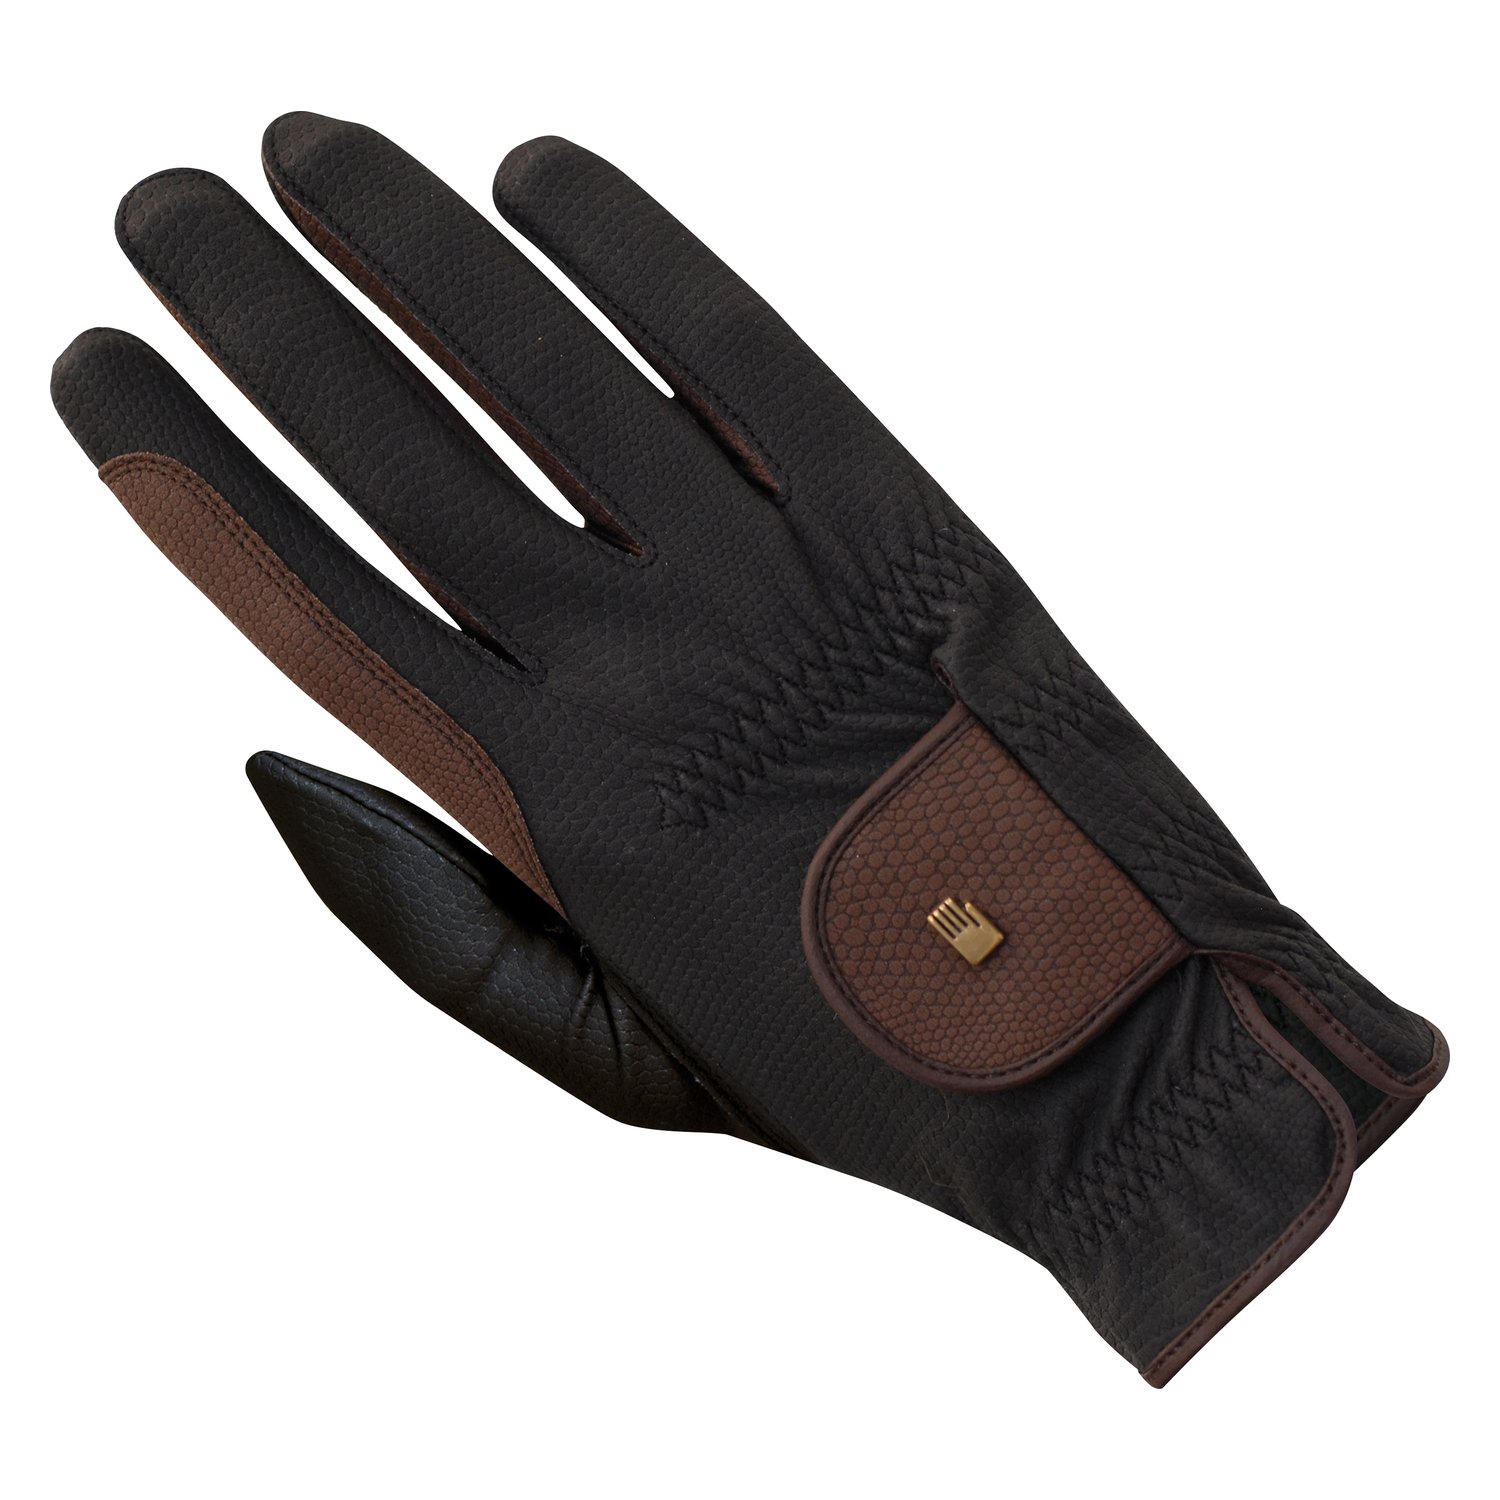 Roeckl Handschuhe Malta Winter schwarz/mokka | 7,5